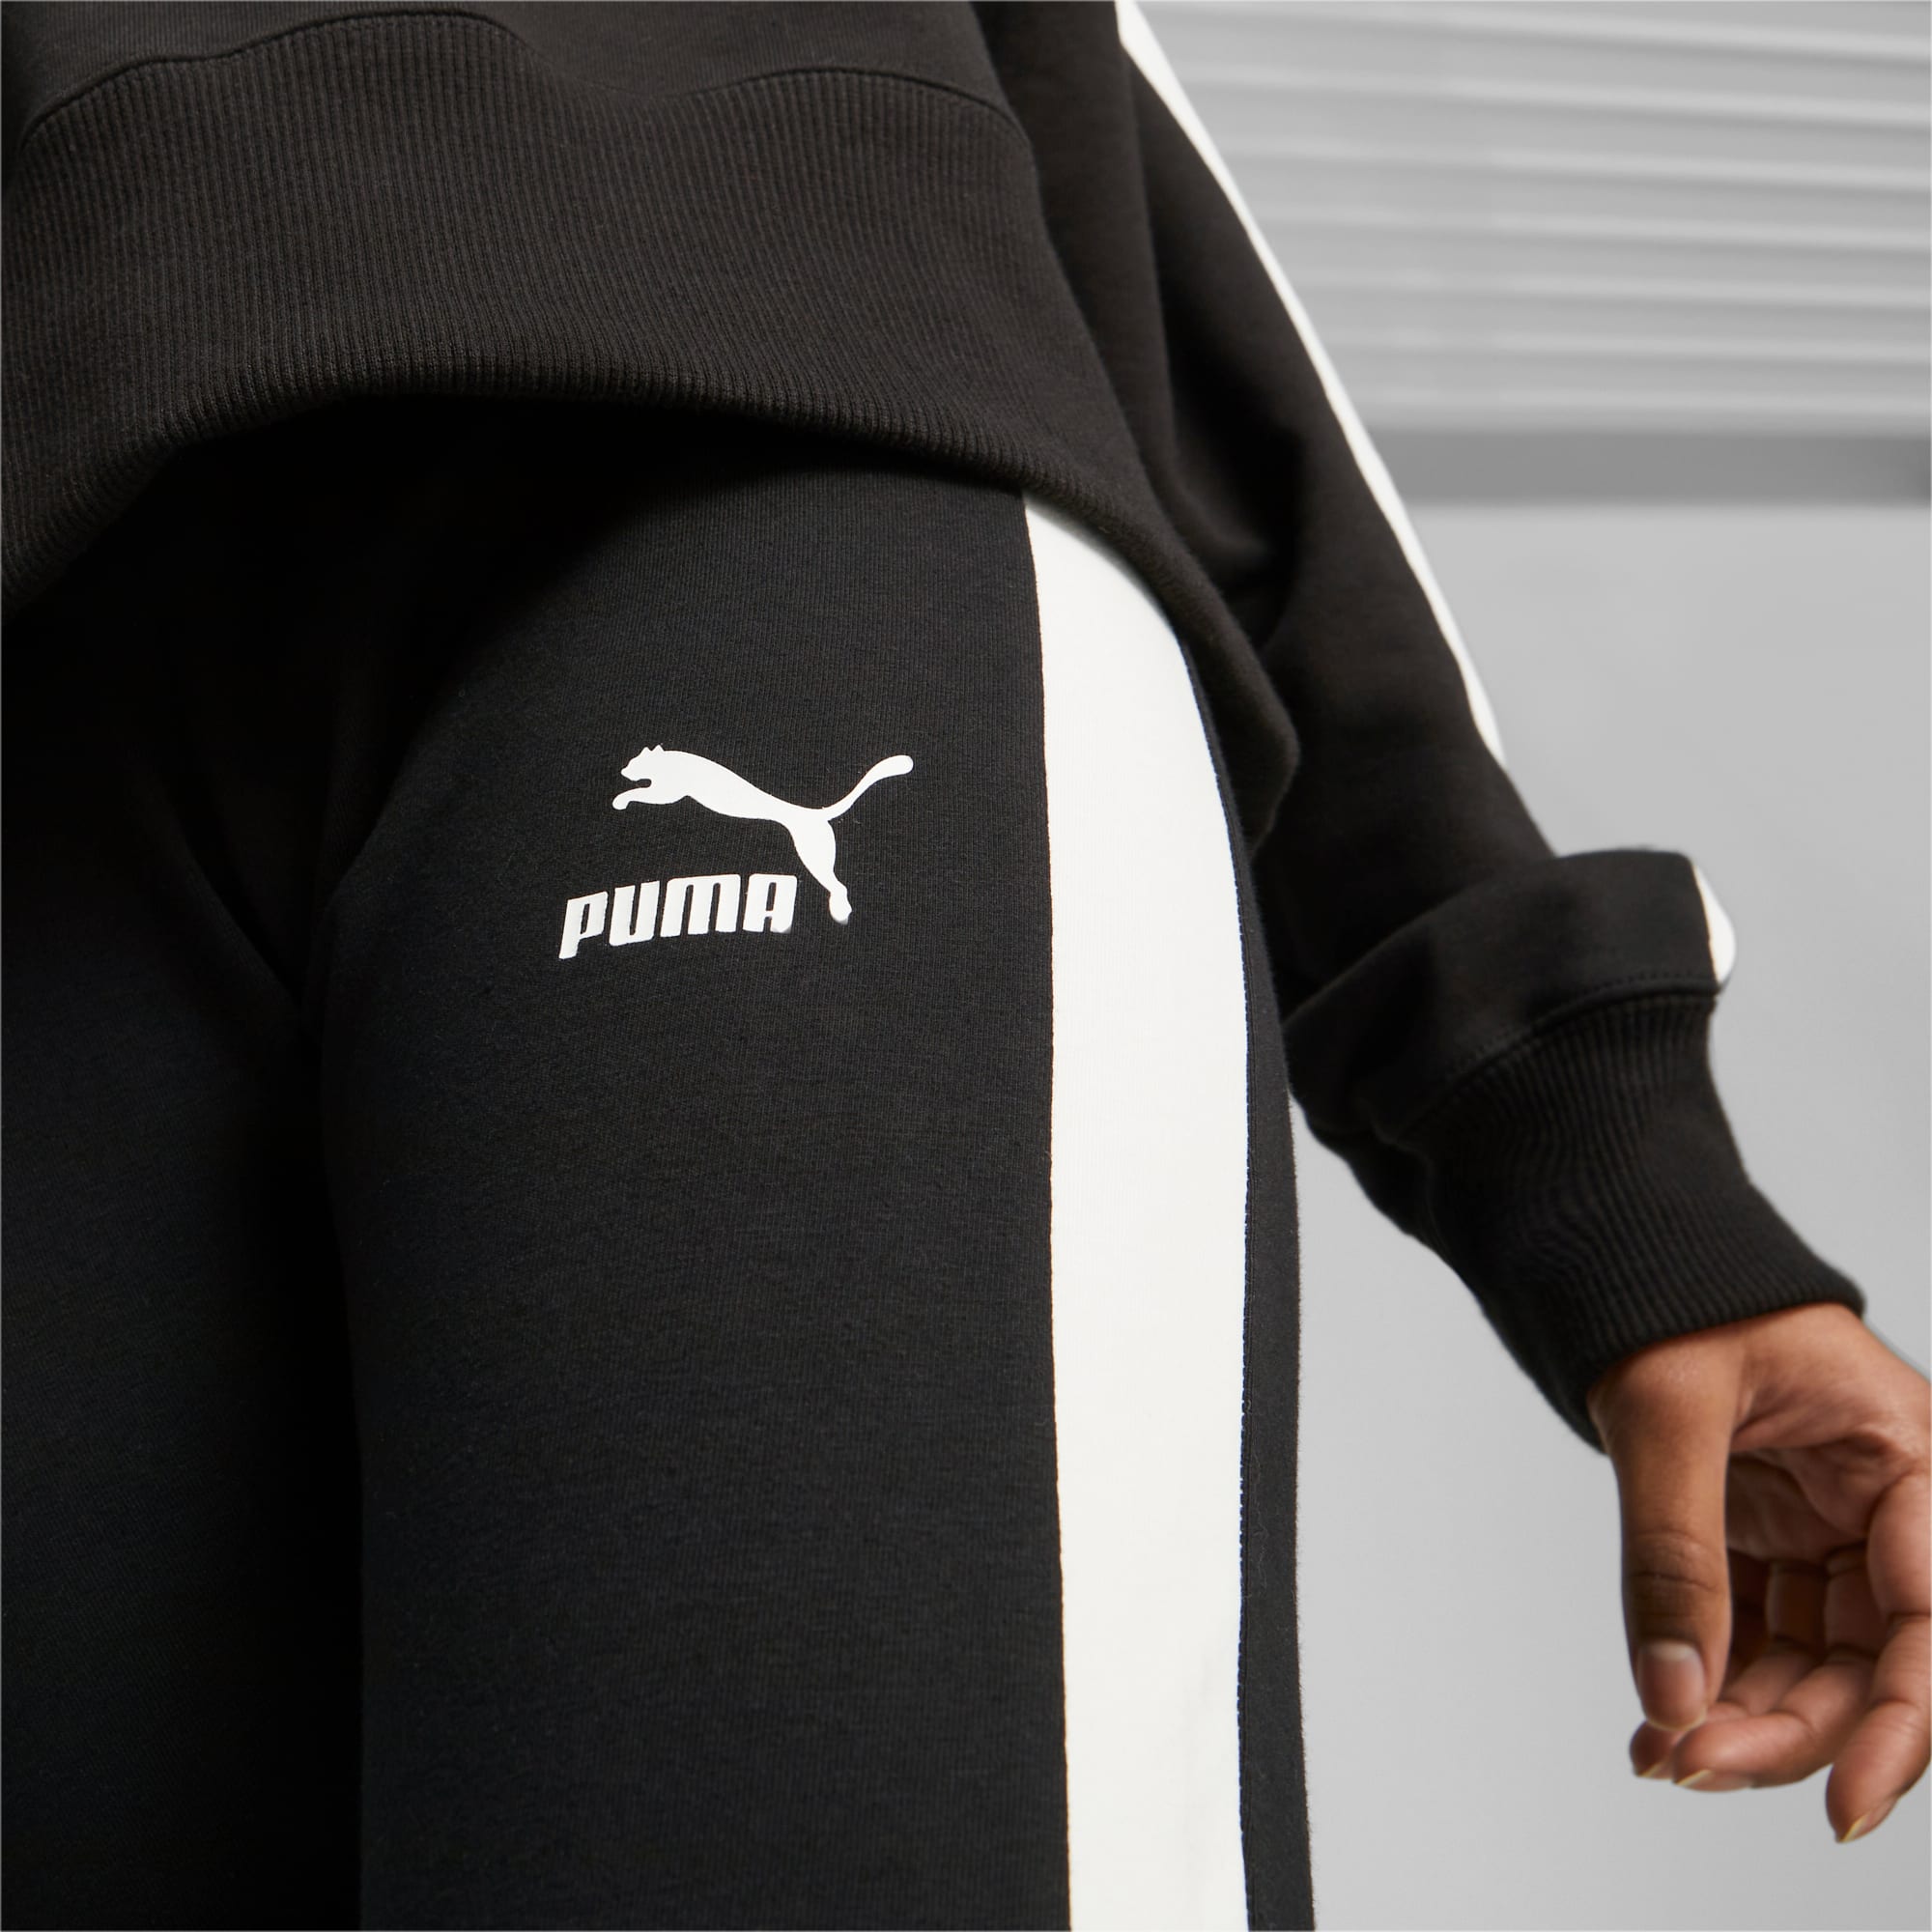 Puma Women's T7 Shiny Leggings - Black - Hibbett